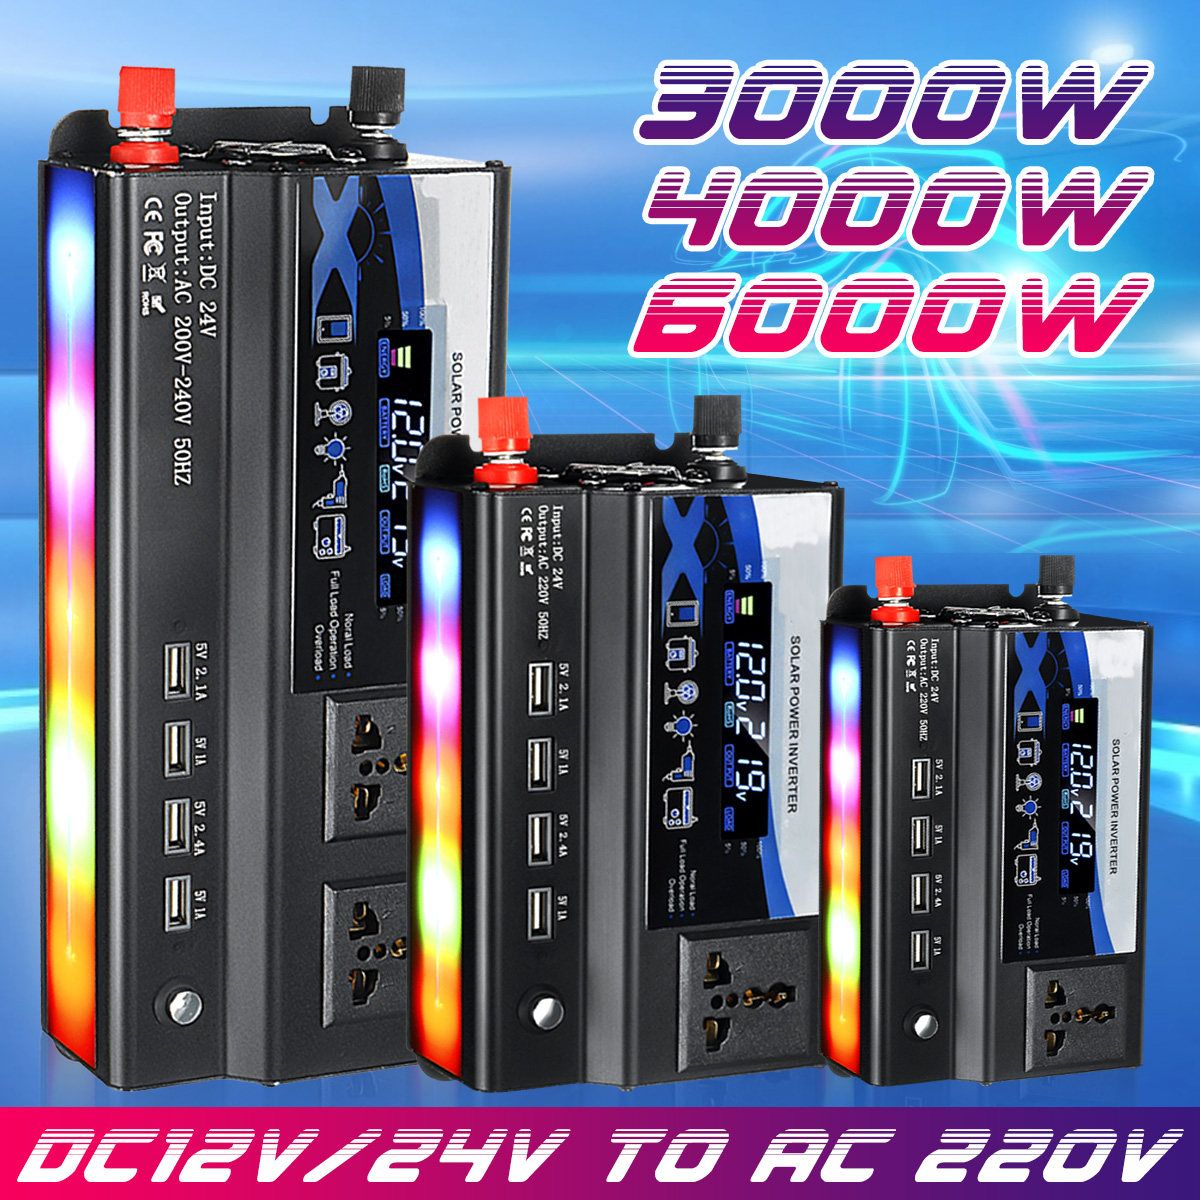 300040006000W-Car-Power-Inverter-DC-12V24V-To-AC-220V-4USB-Outlets-Solar-Converter-1802316-1